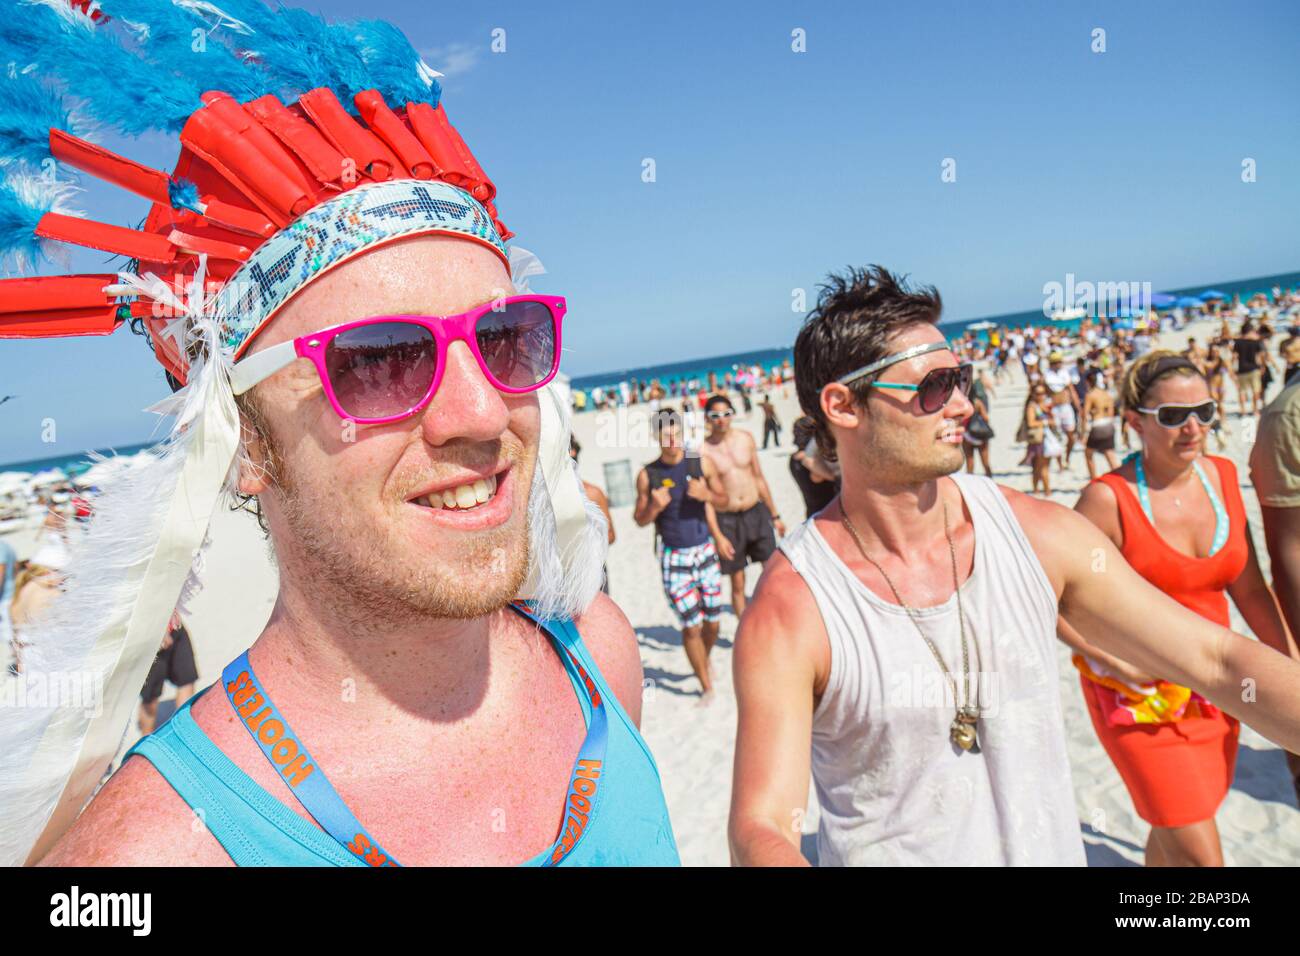 Miami Beach Florida, pausa primaverile, Funksion Fashion Week, ingresso all'evento, uomo uomini maschio adulti, indirizzo indiano, FL110331110 Foto Stock